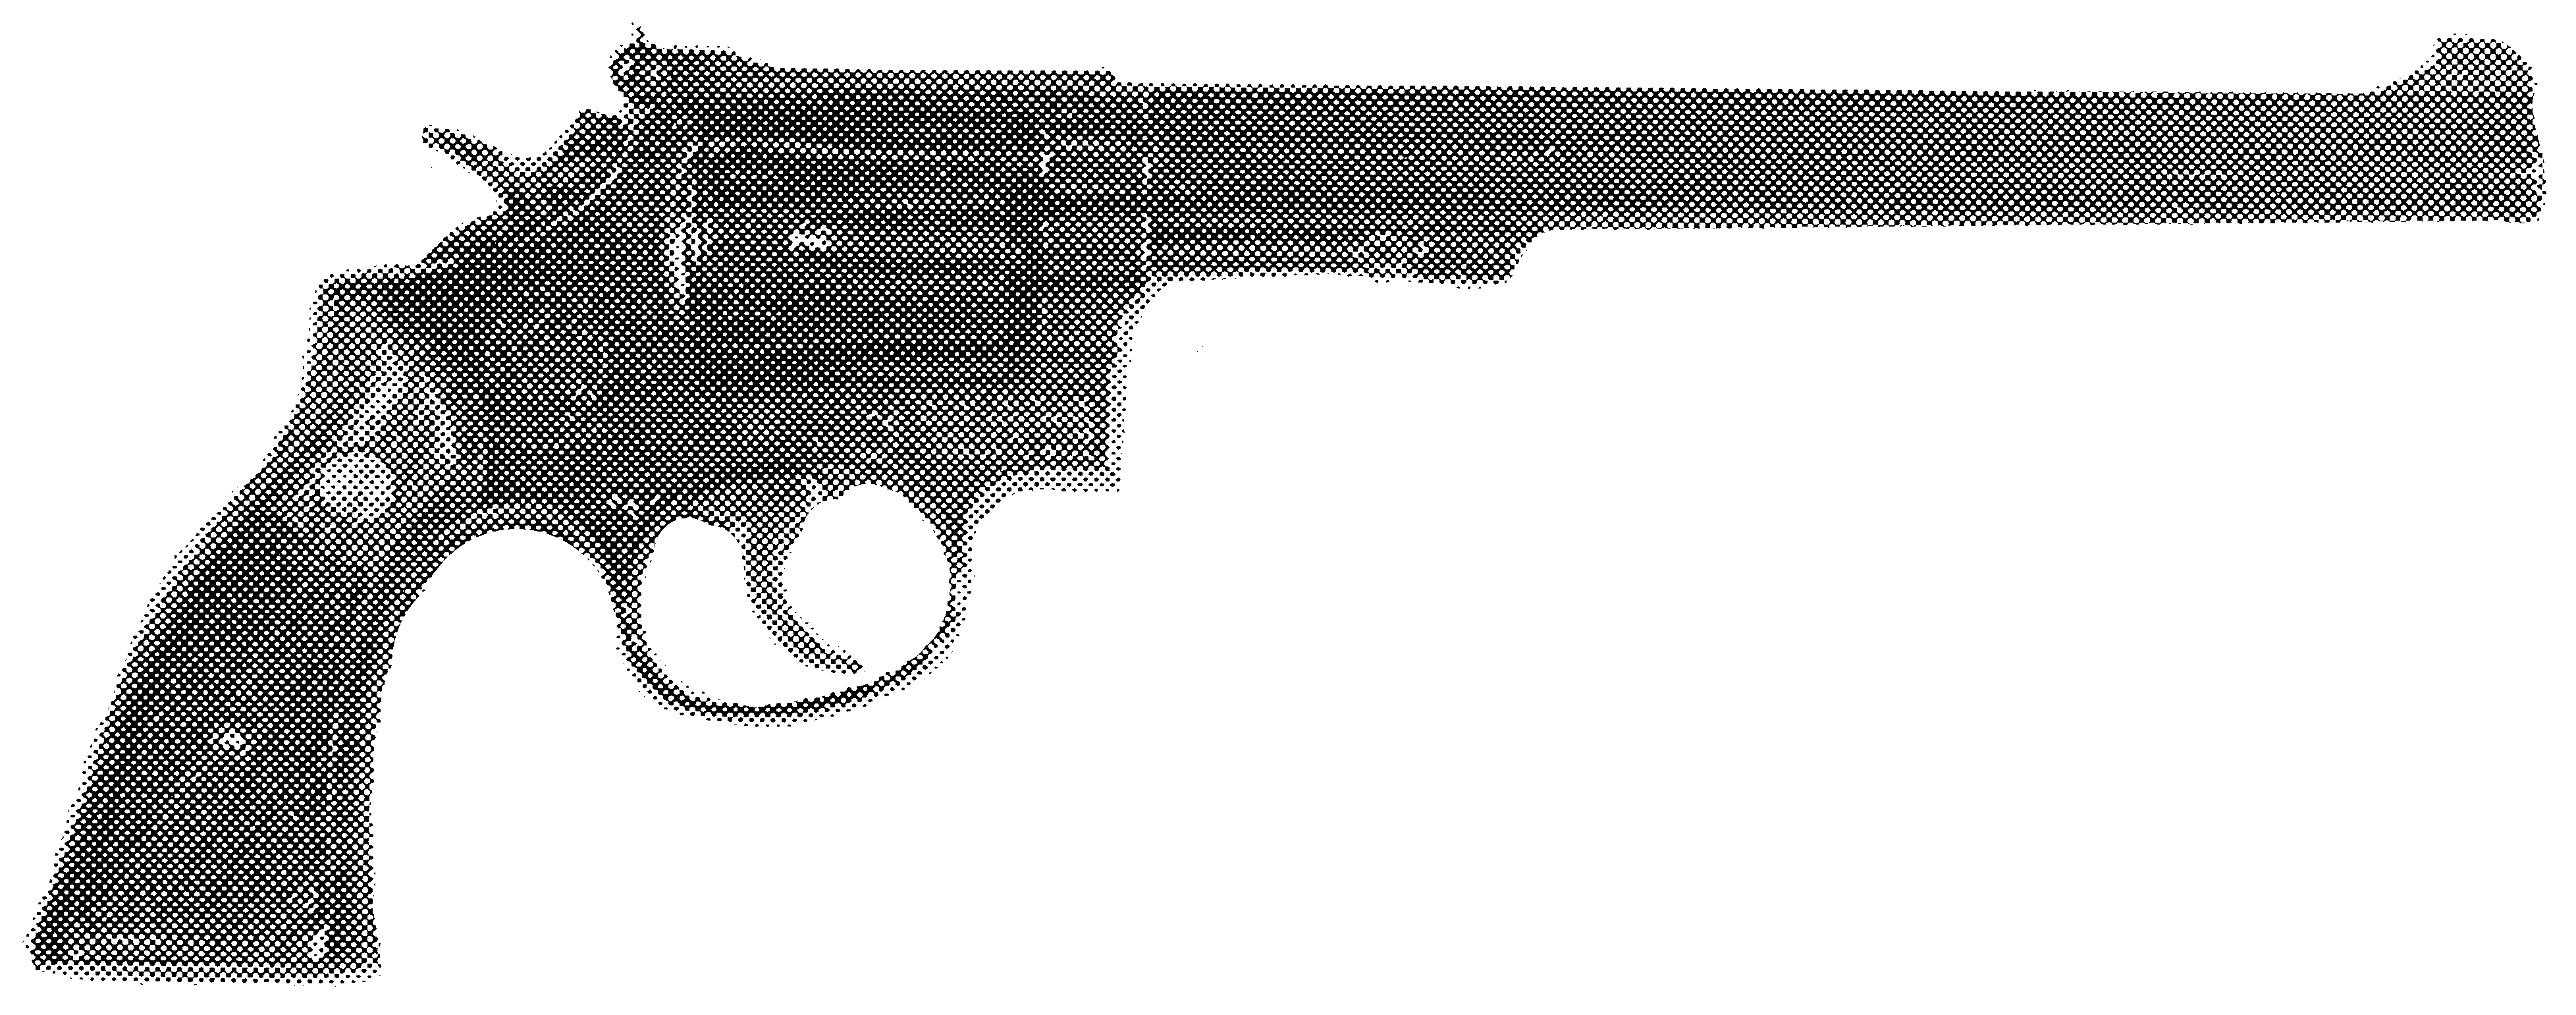 Model 48 (K-22 Masterpiece Magnum)